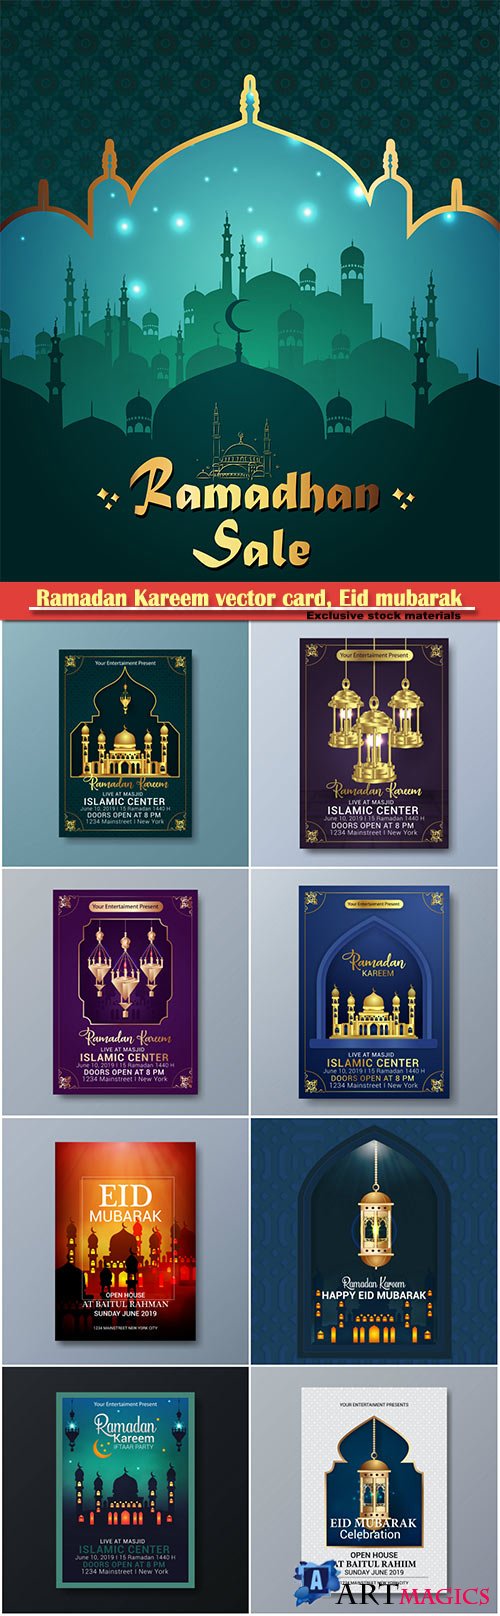 Ramadan Kareem vector card, Eid mubarak calligraphy design templates